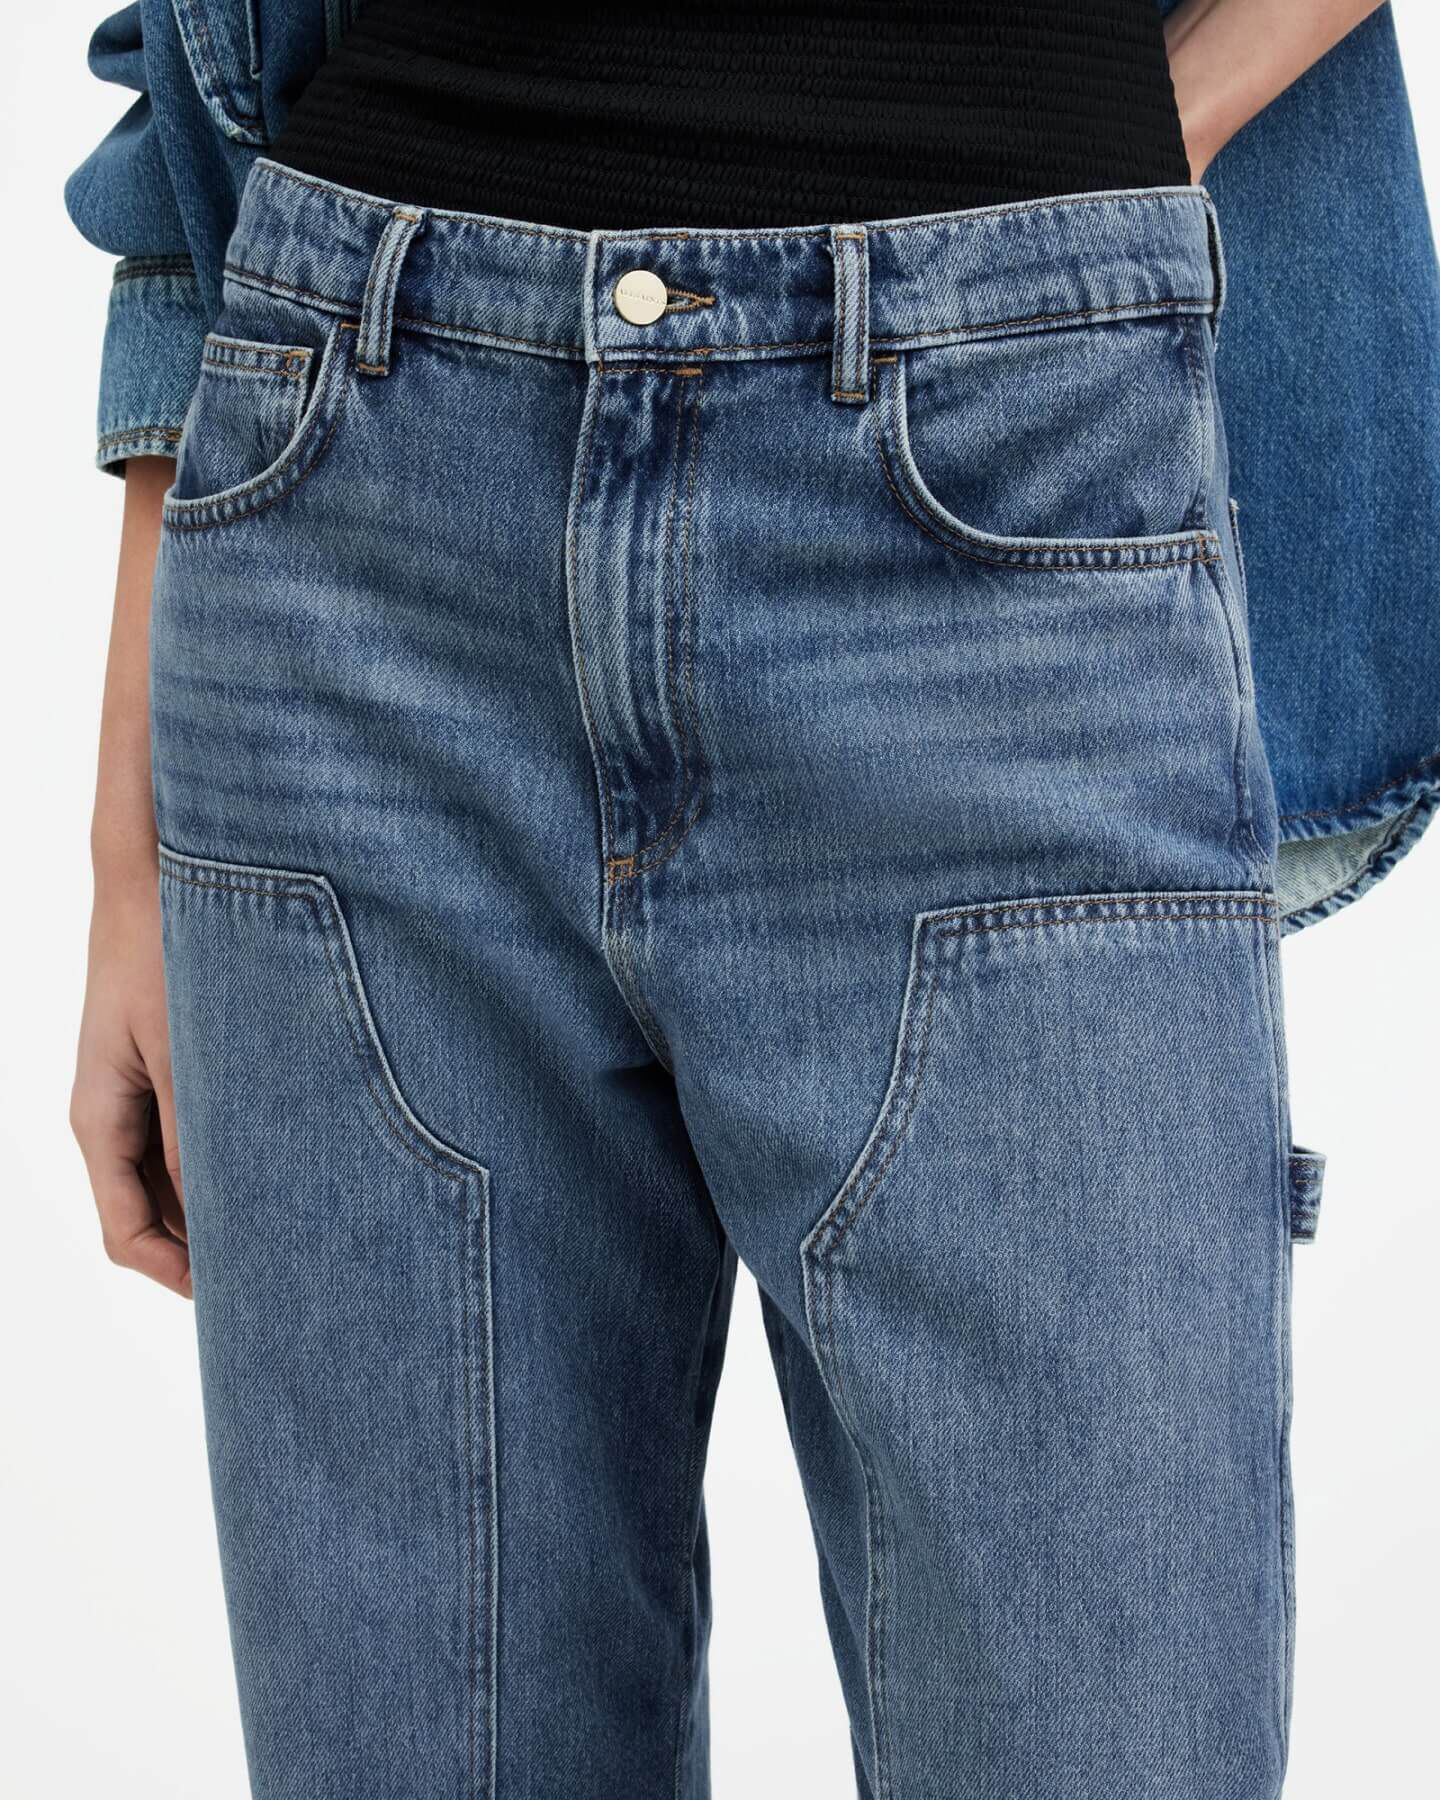 Shopper le jean style charpentier jambe ample en denim Mia.